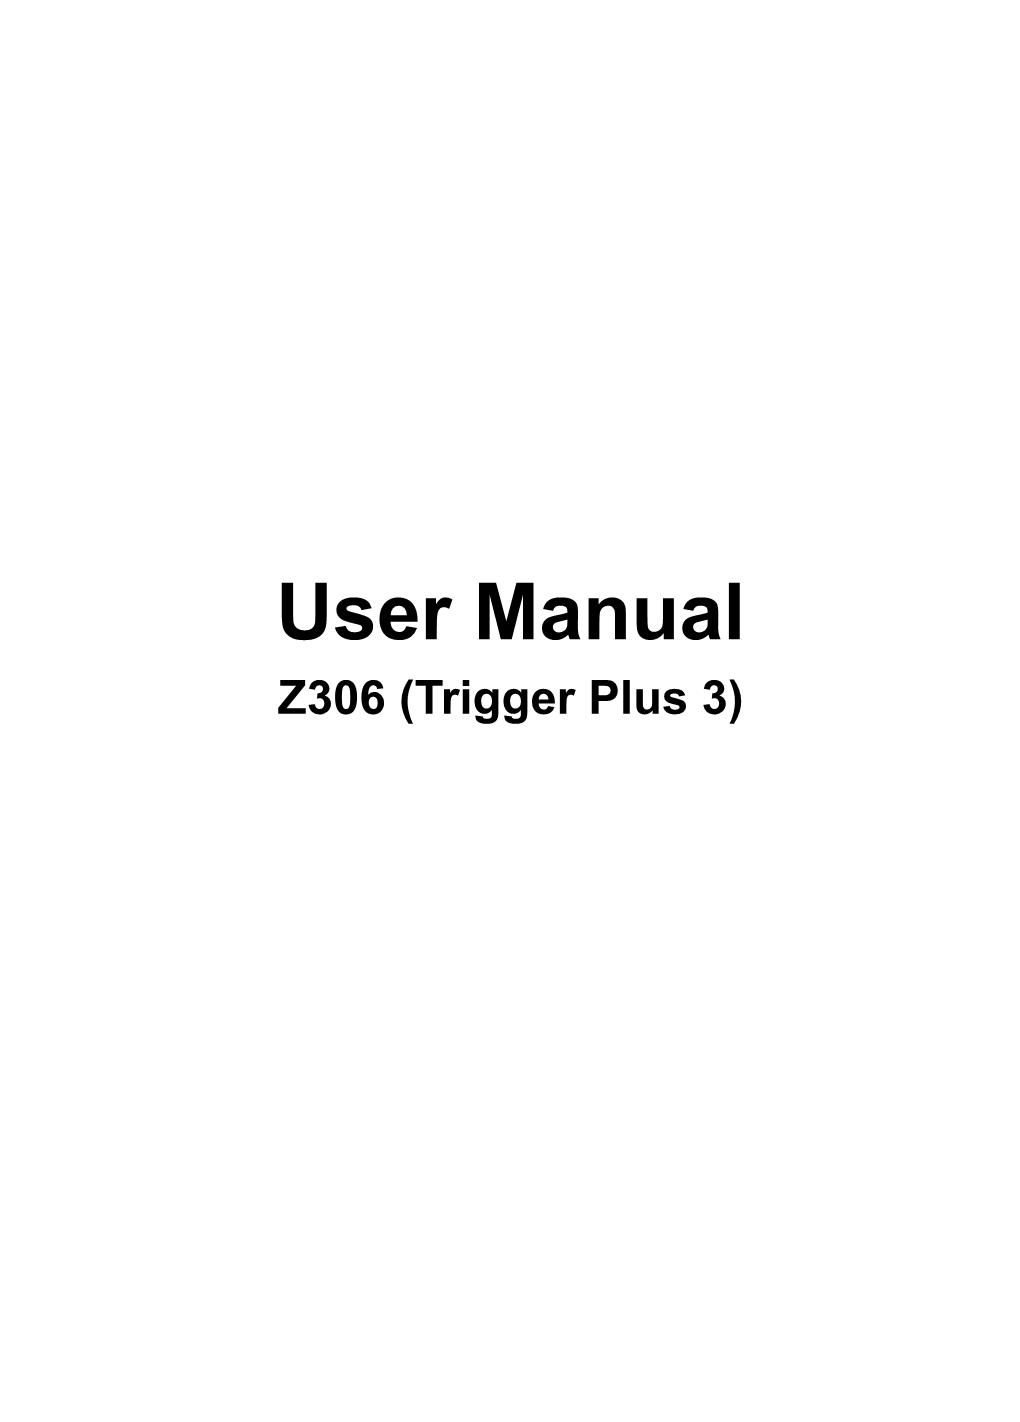 User Manual Z306 (Trigger Plus 3)